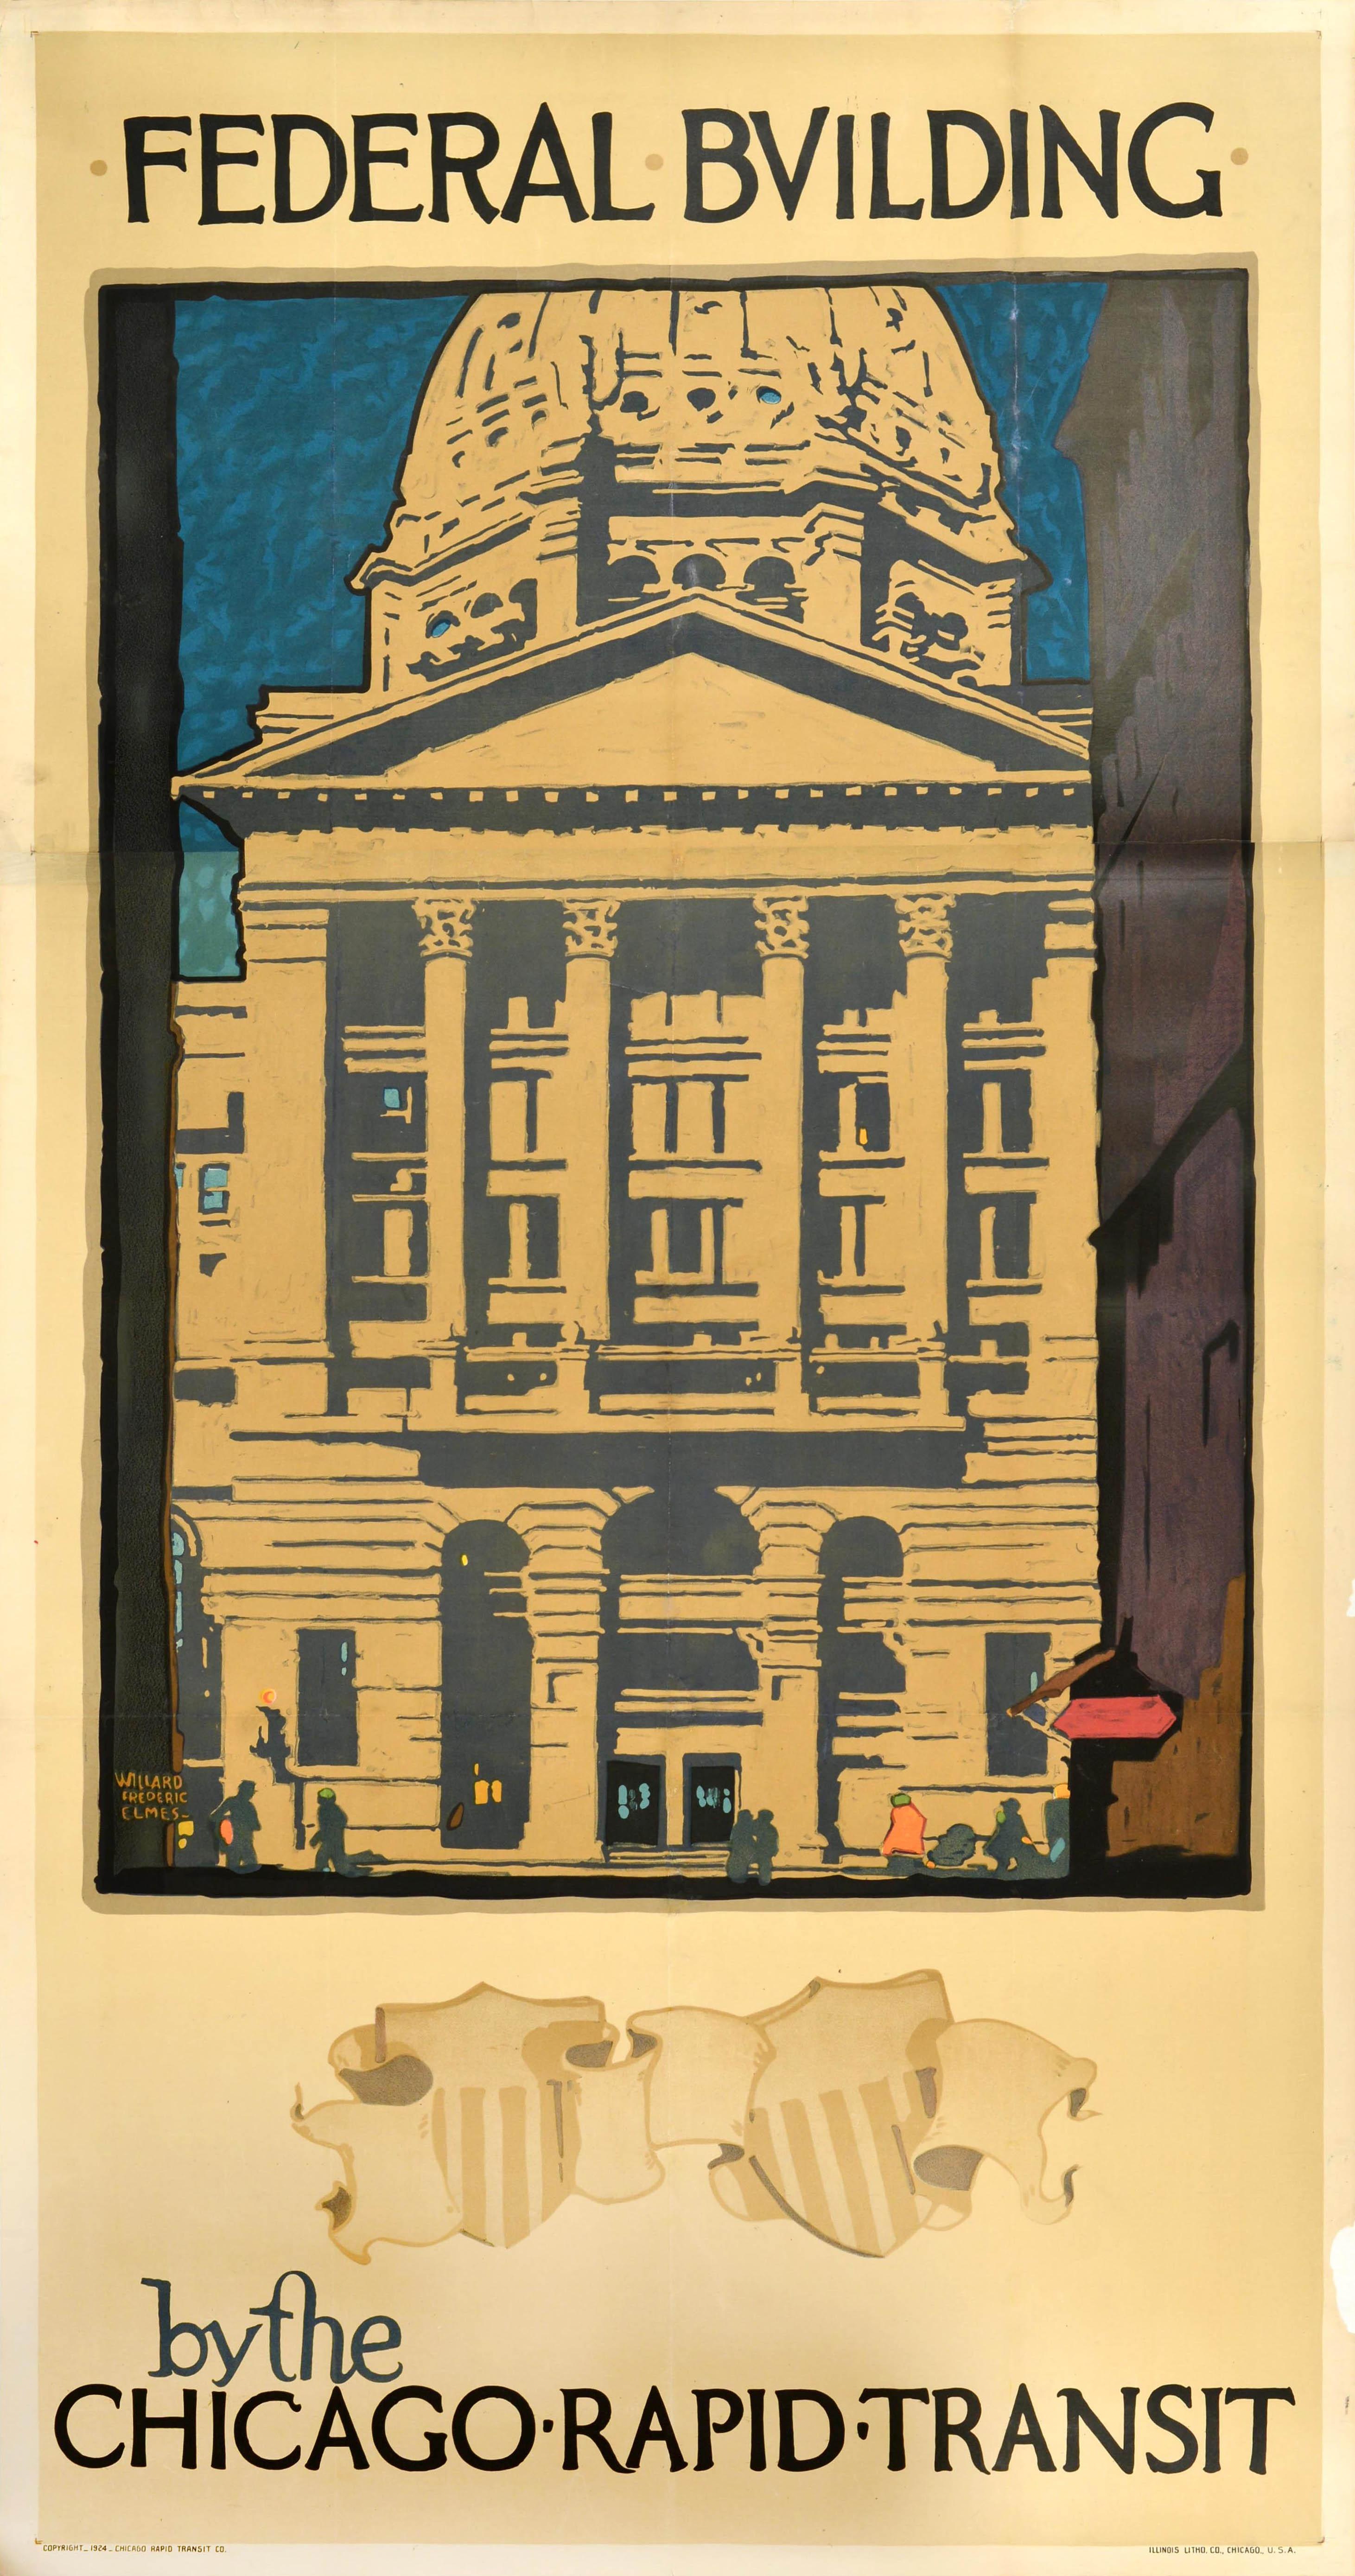 Willard Frederick Elmes Print - Original Vintage Travel Poster Federal Building Chicago Rapid Transit Illinois